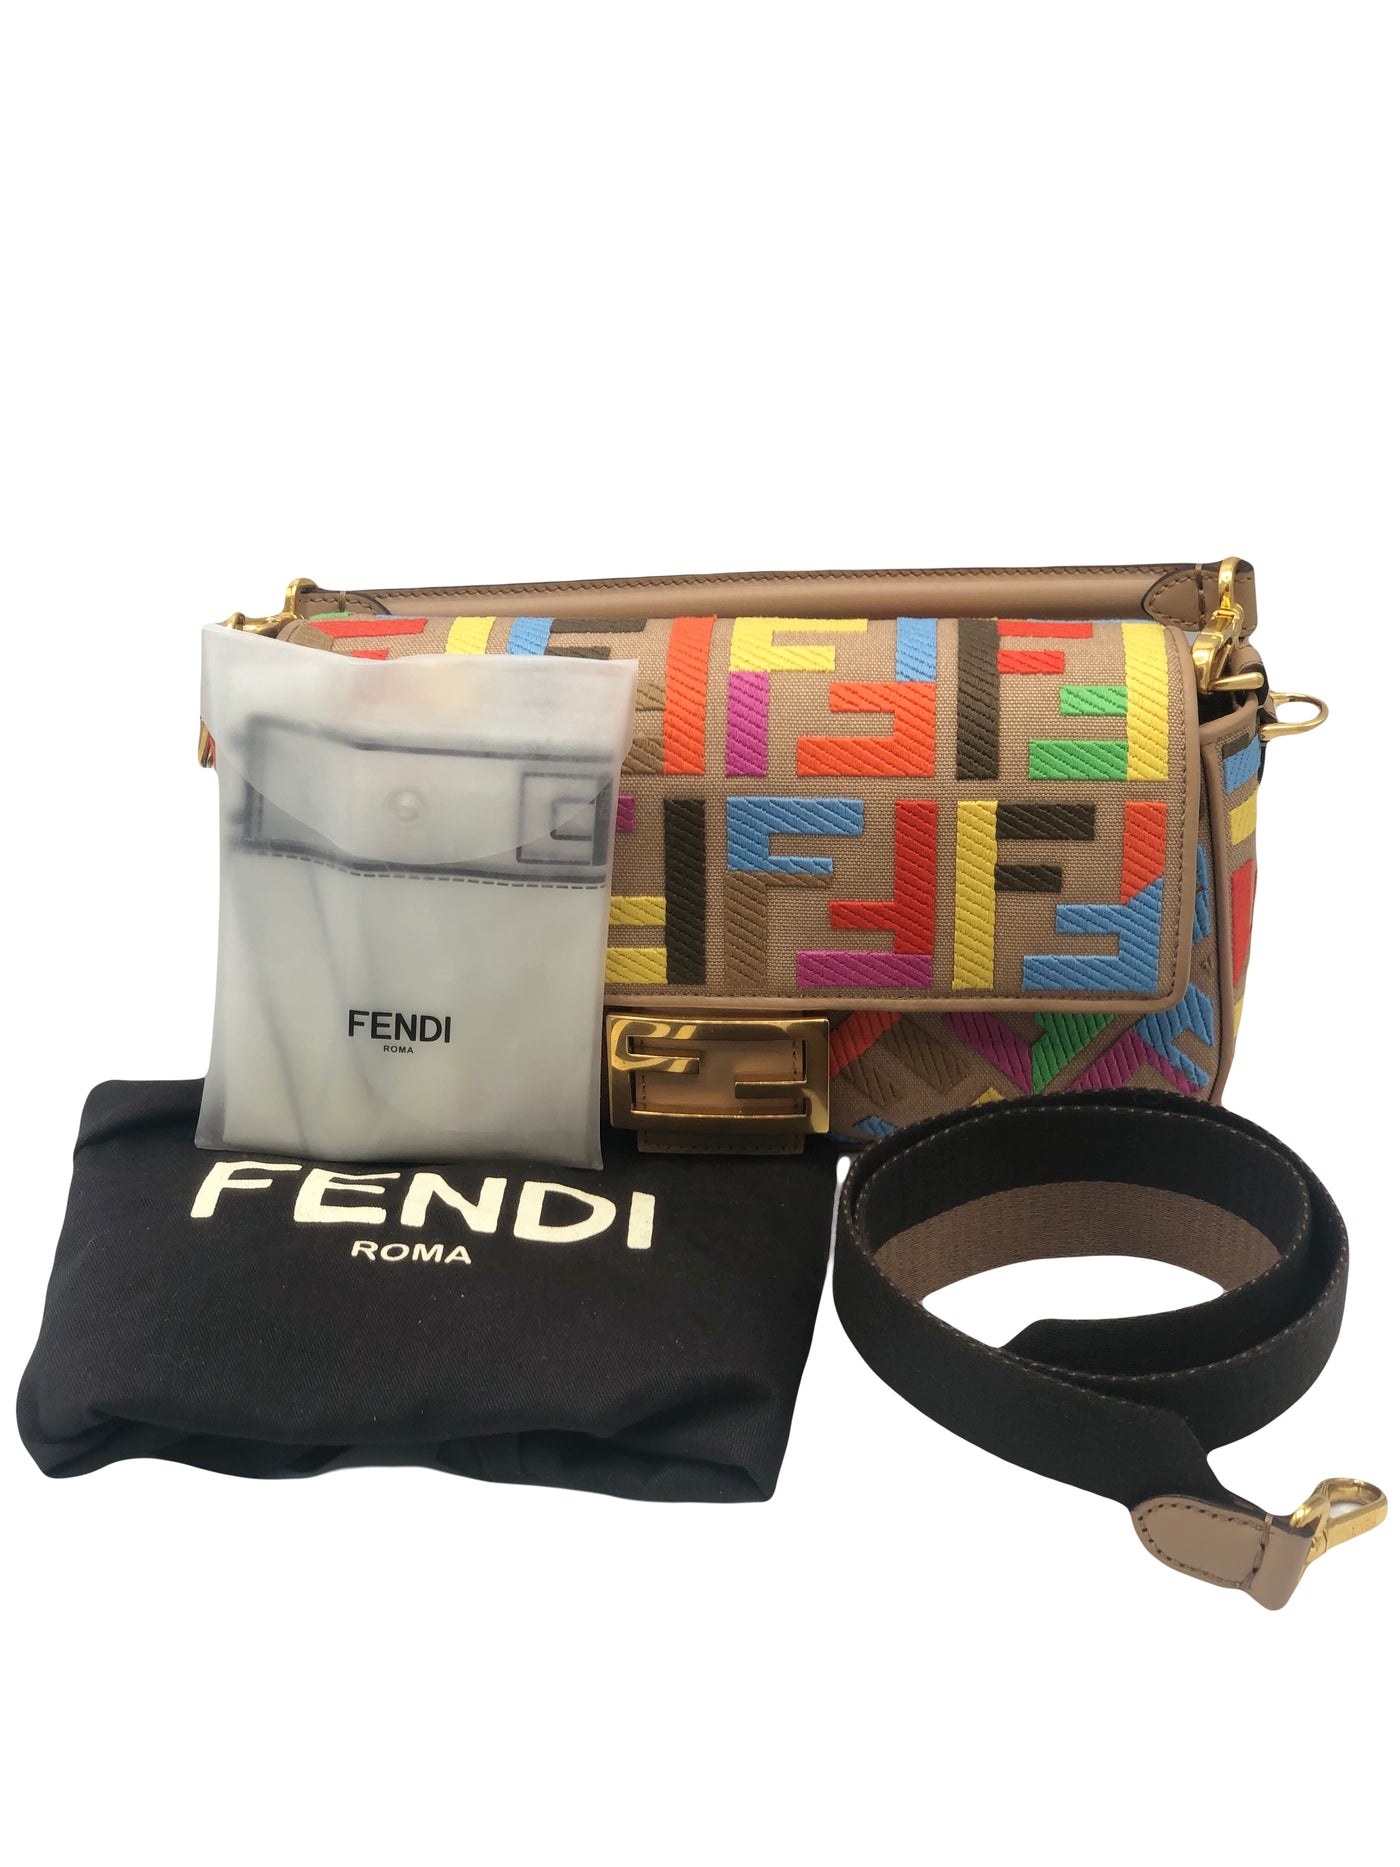 FENDI Baguette Multi two straps RRP: £2550